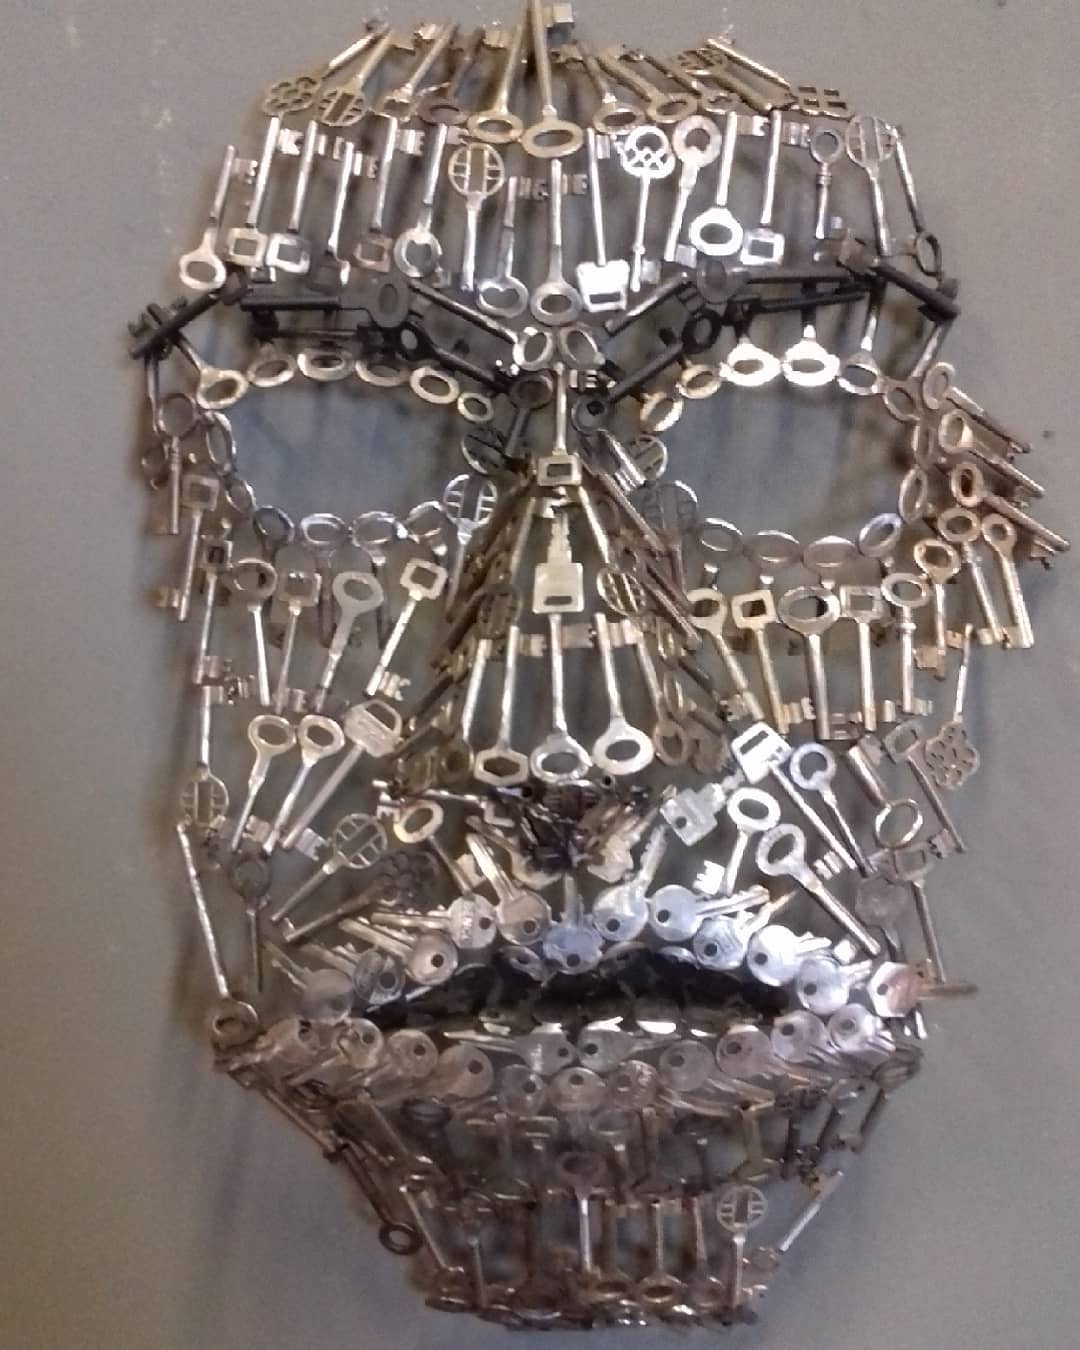 scrap metal sculpture face jos hammers